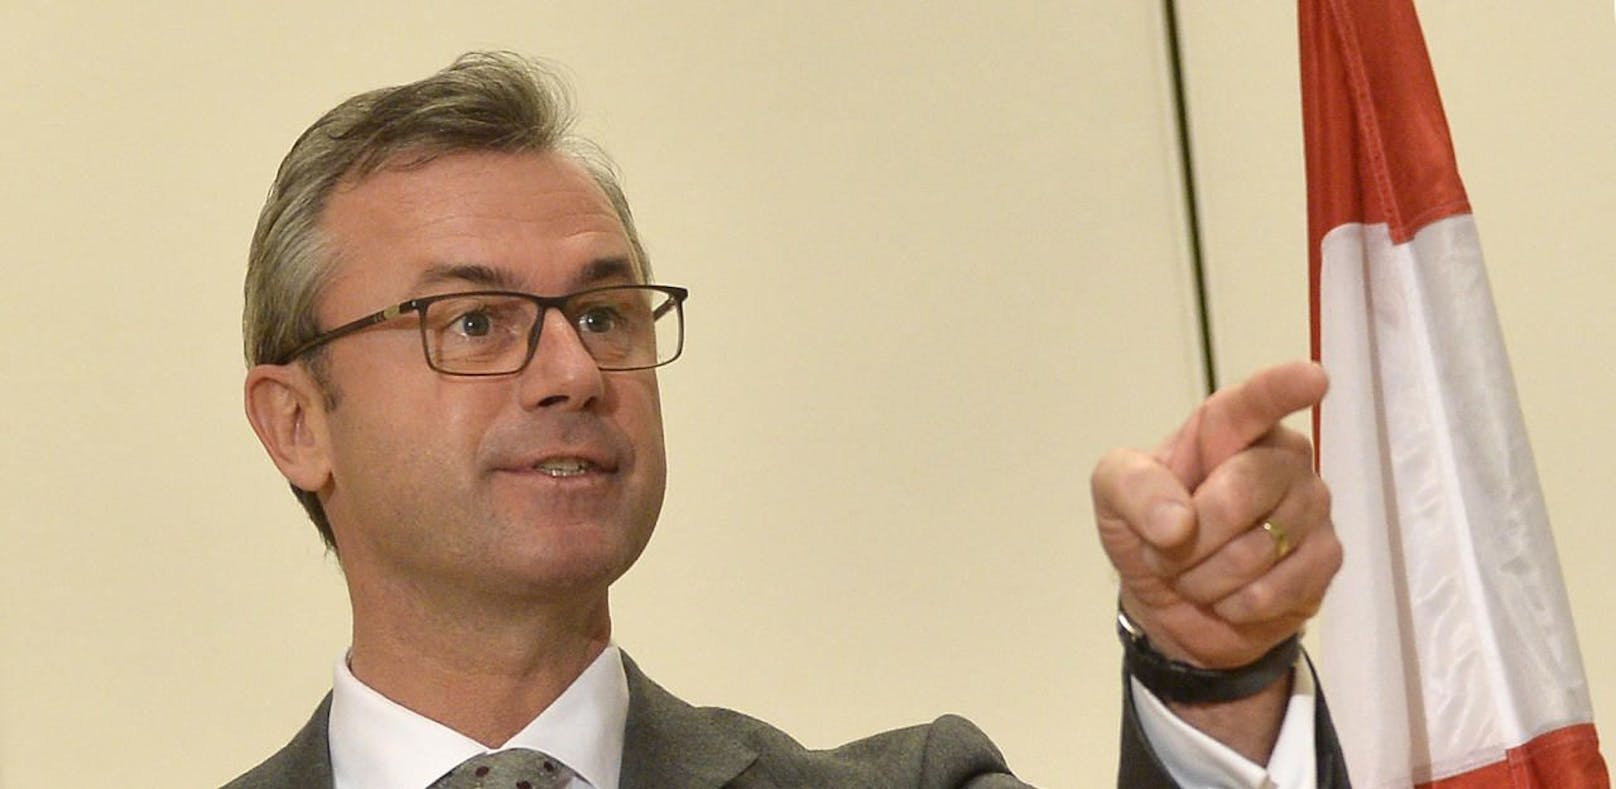 Verkehrsminister Norbert Hofer (FPÖ) will Österreichs Autofahrer entlasten.